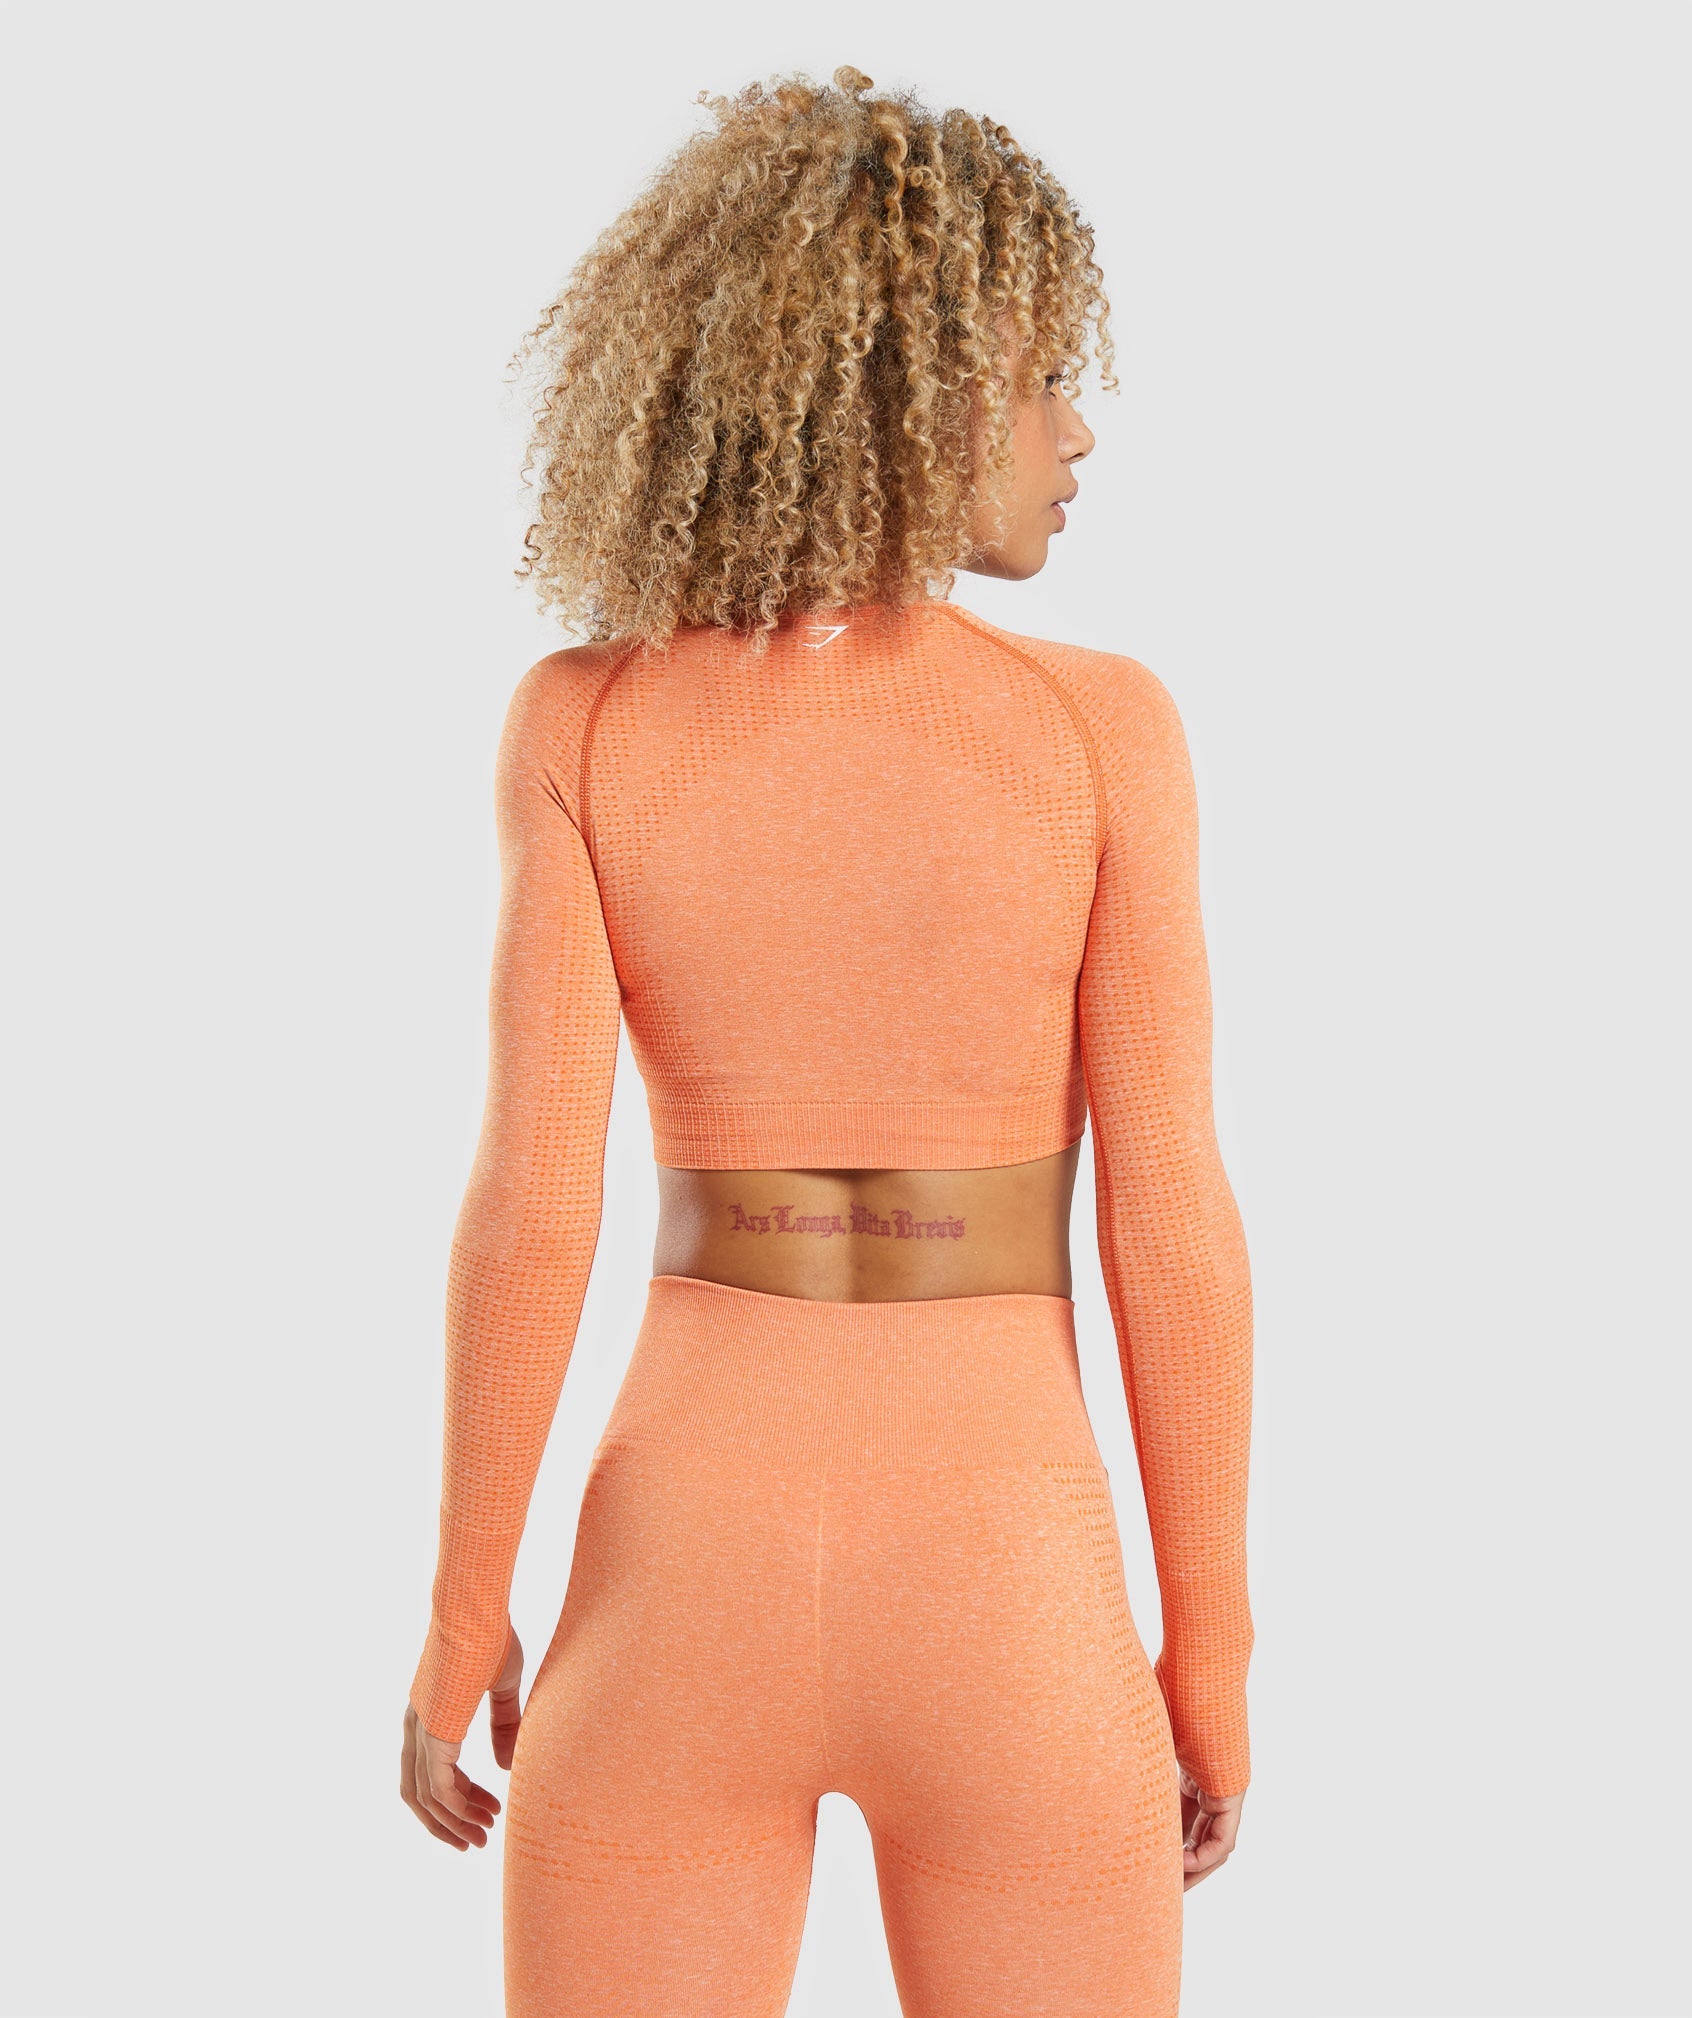 Gymshark Vital Seamless Womens Ladies Fitness Legging Orange - XL :  : Clothing, Shoes & Accessories